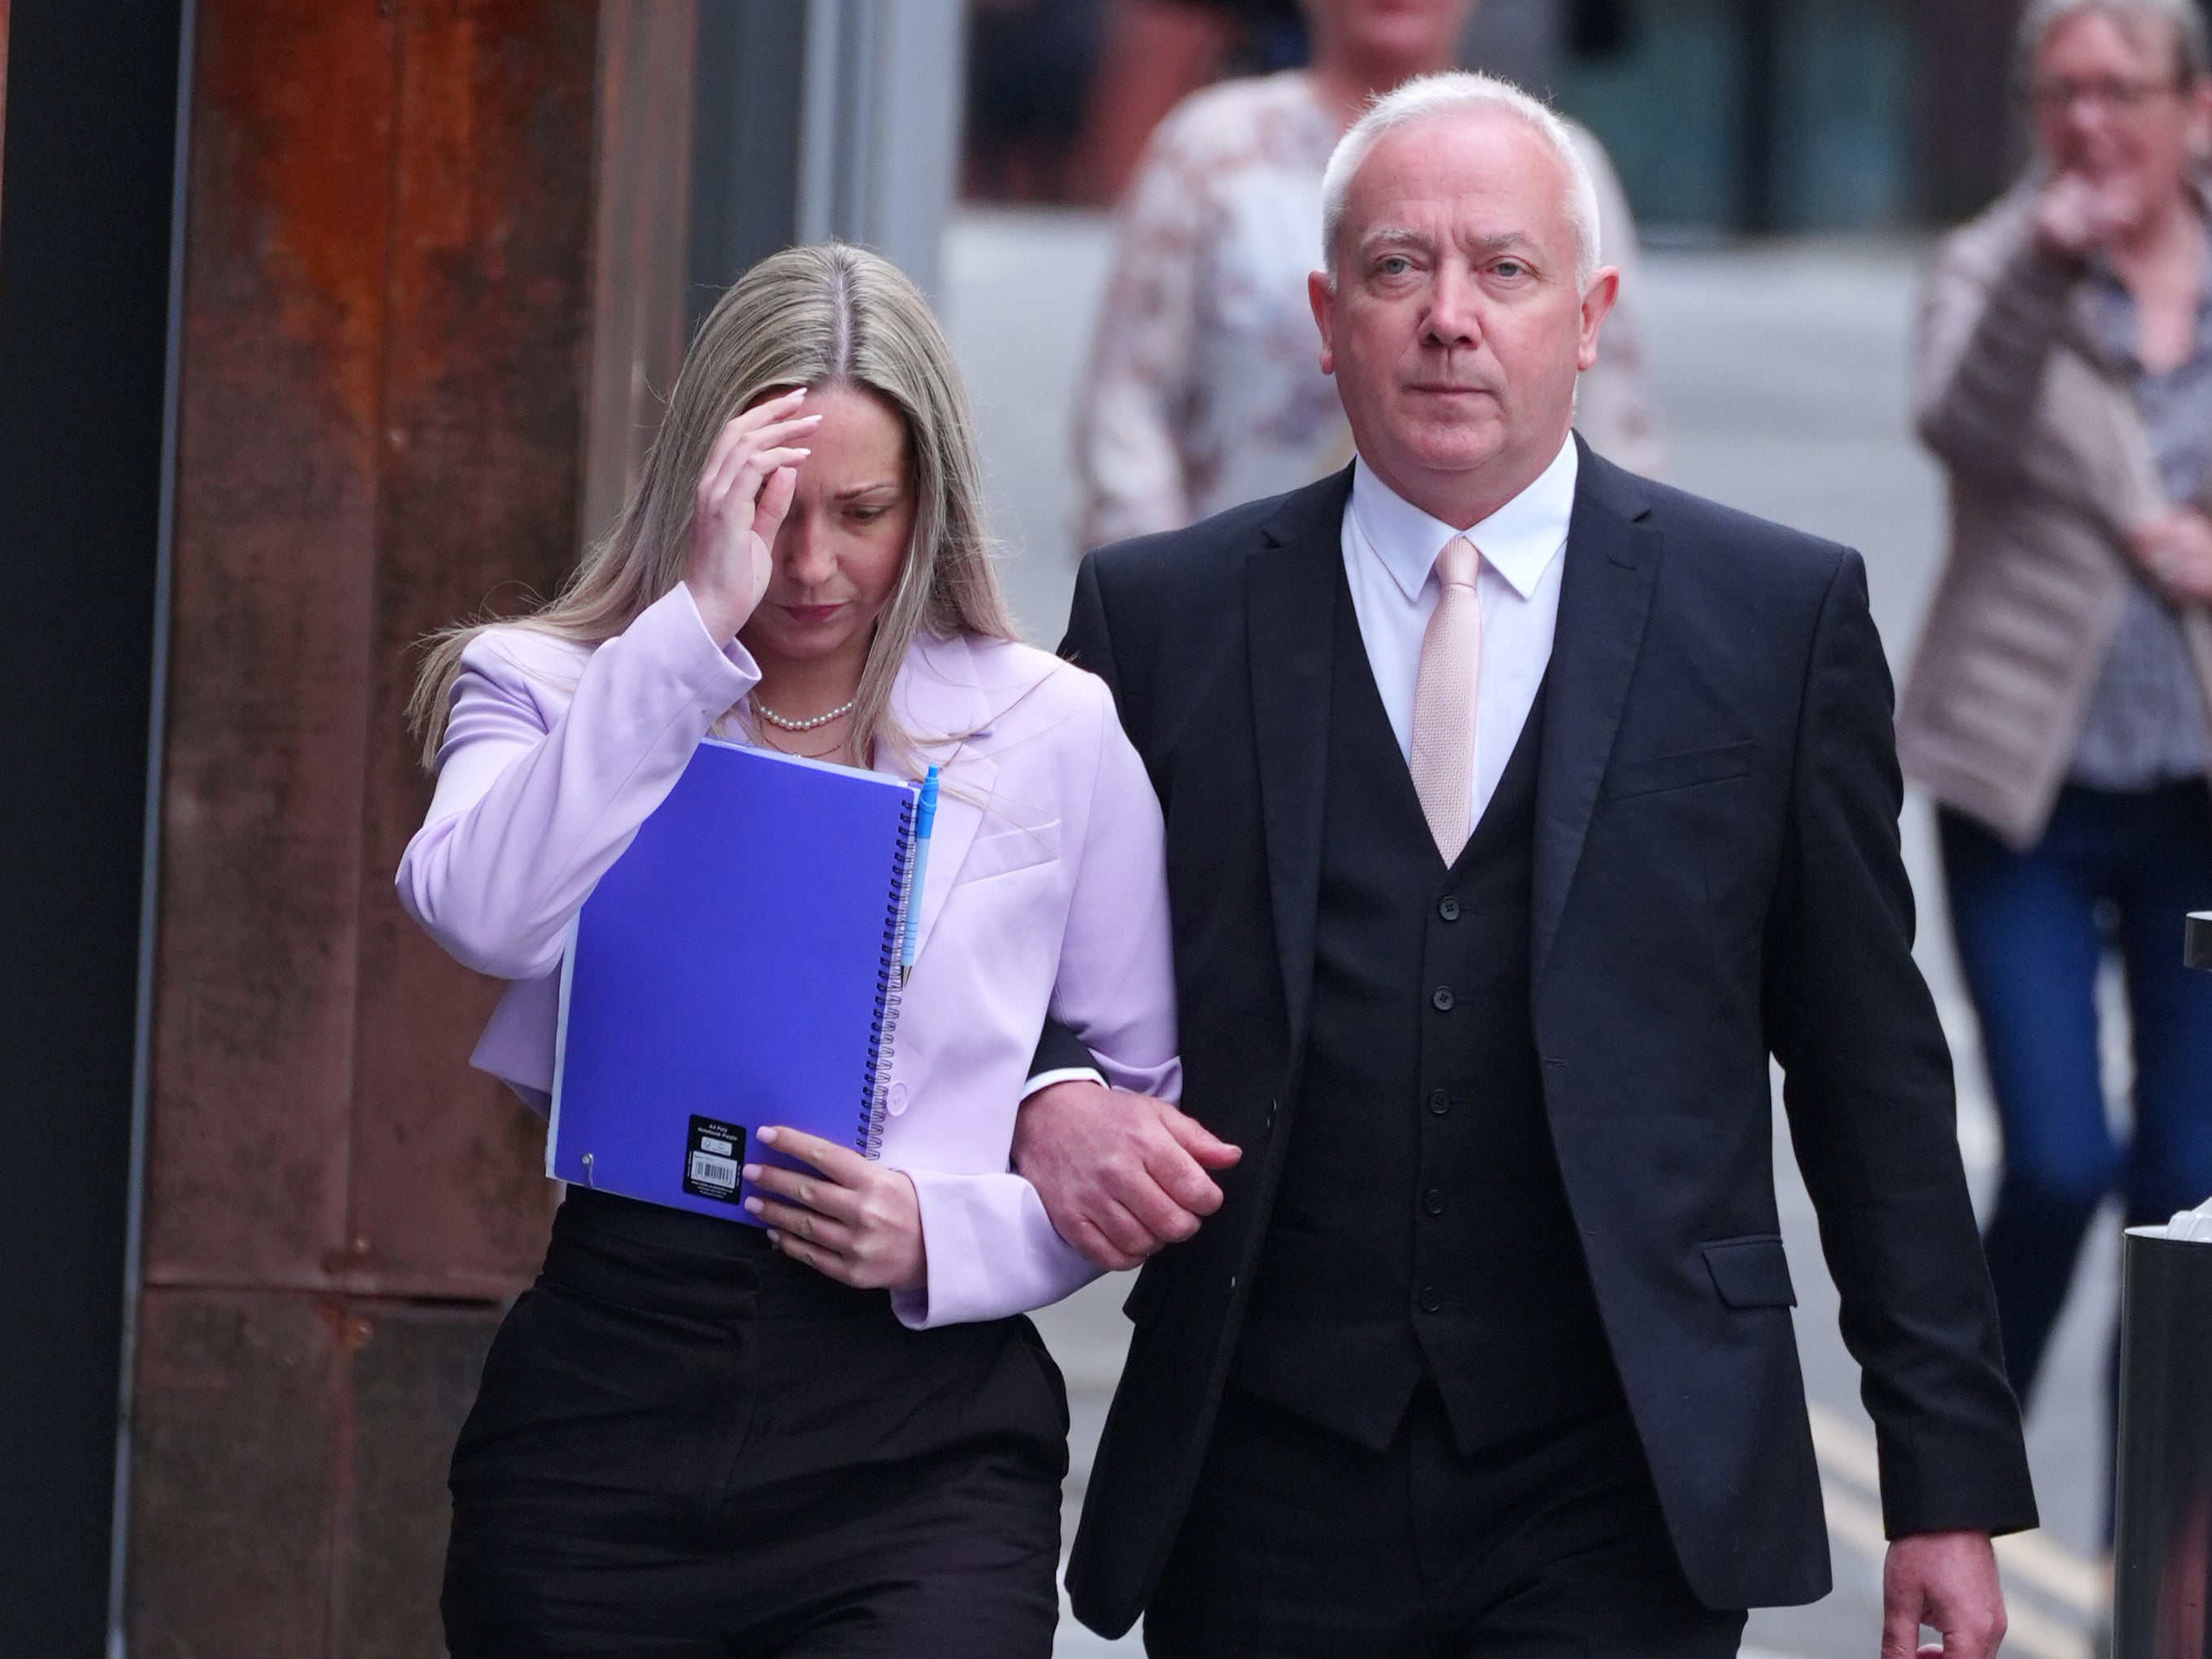 Joynes attends Manchester Crown Court last week